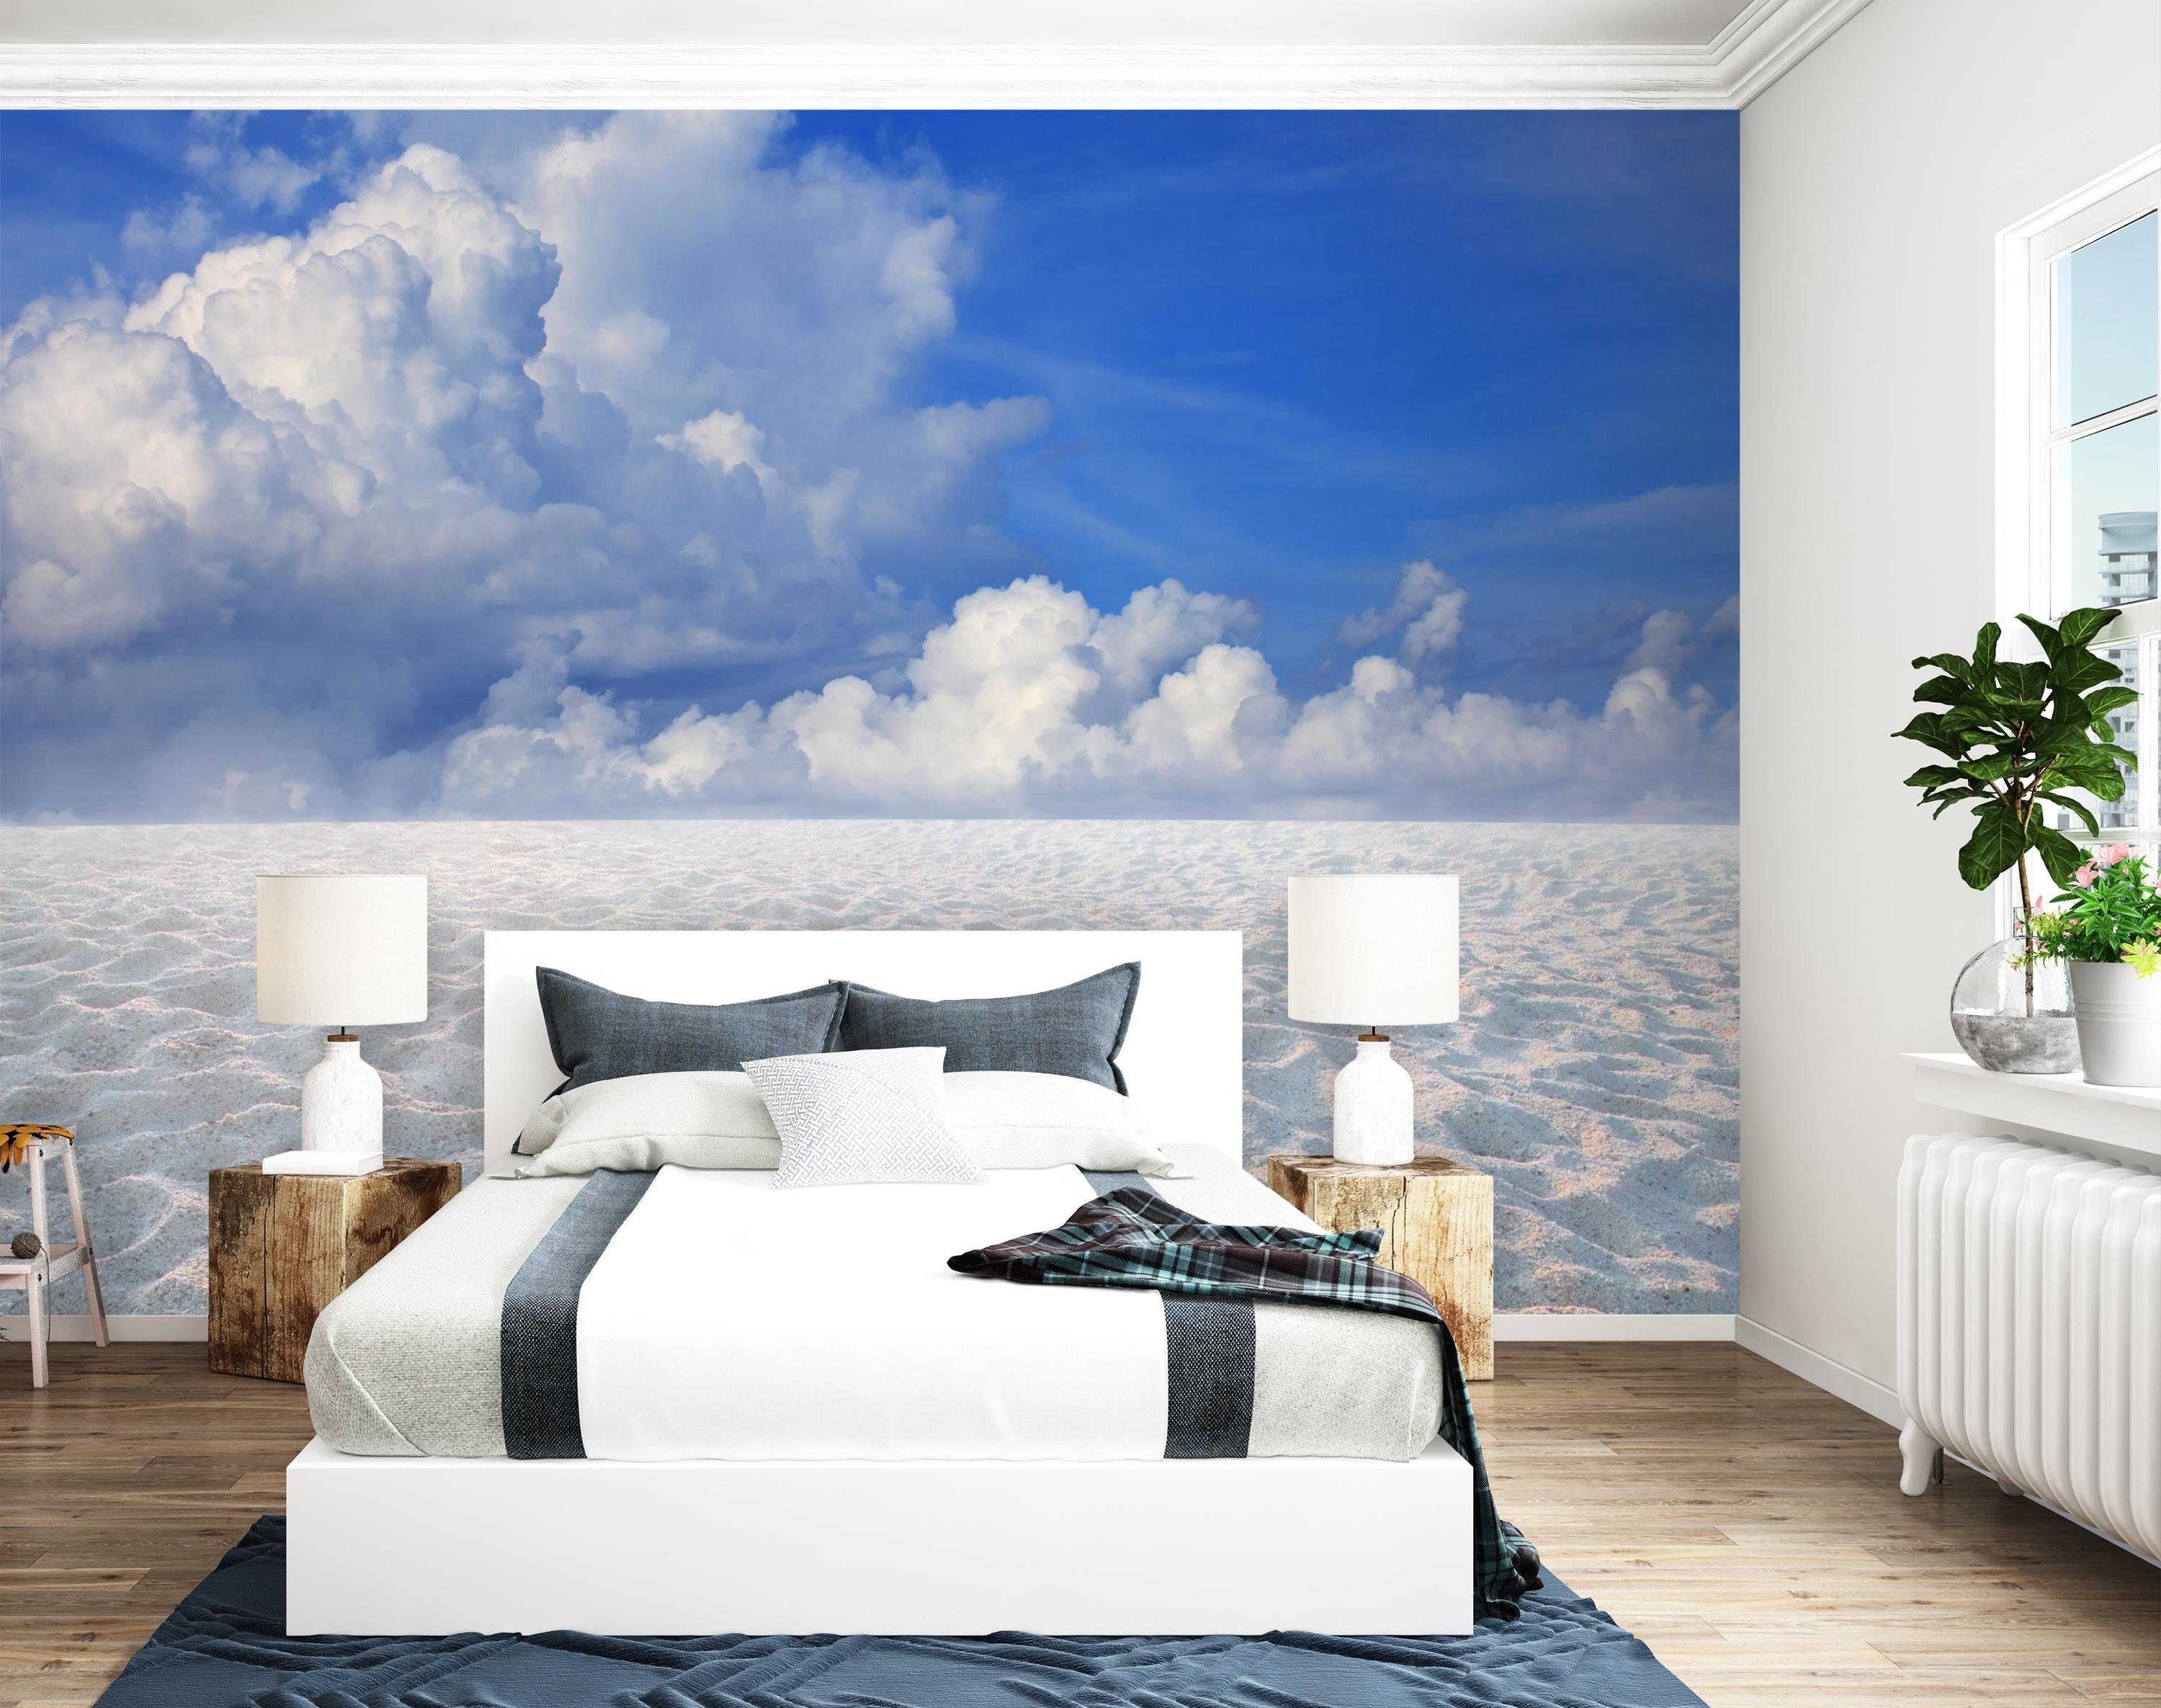 wandmotiv24 Fototapete Sand Landschaft mit blauen Vliestapete Wandtapete, matt, glatt, Motivtapete, Himmel, einem